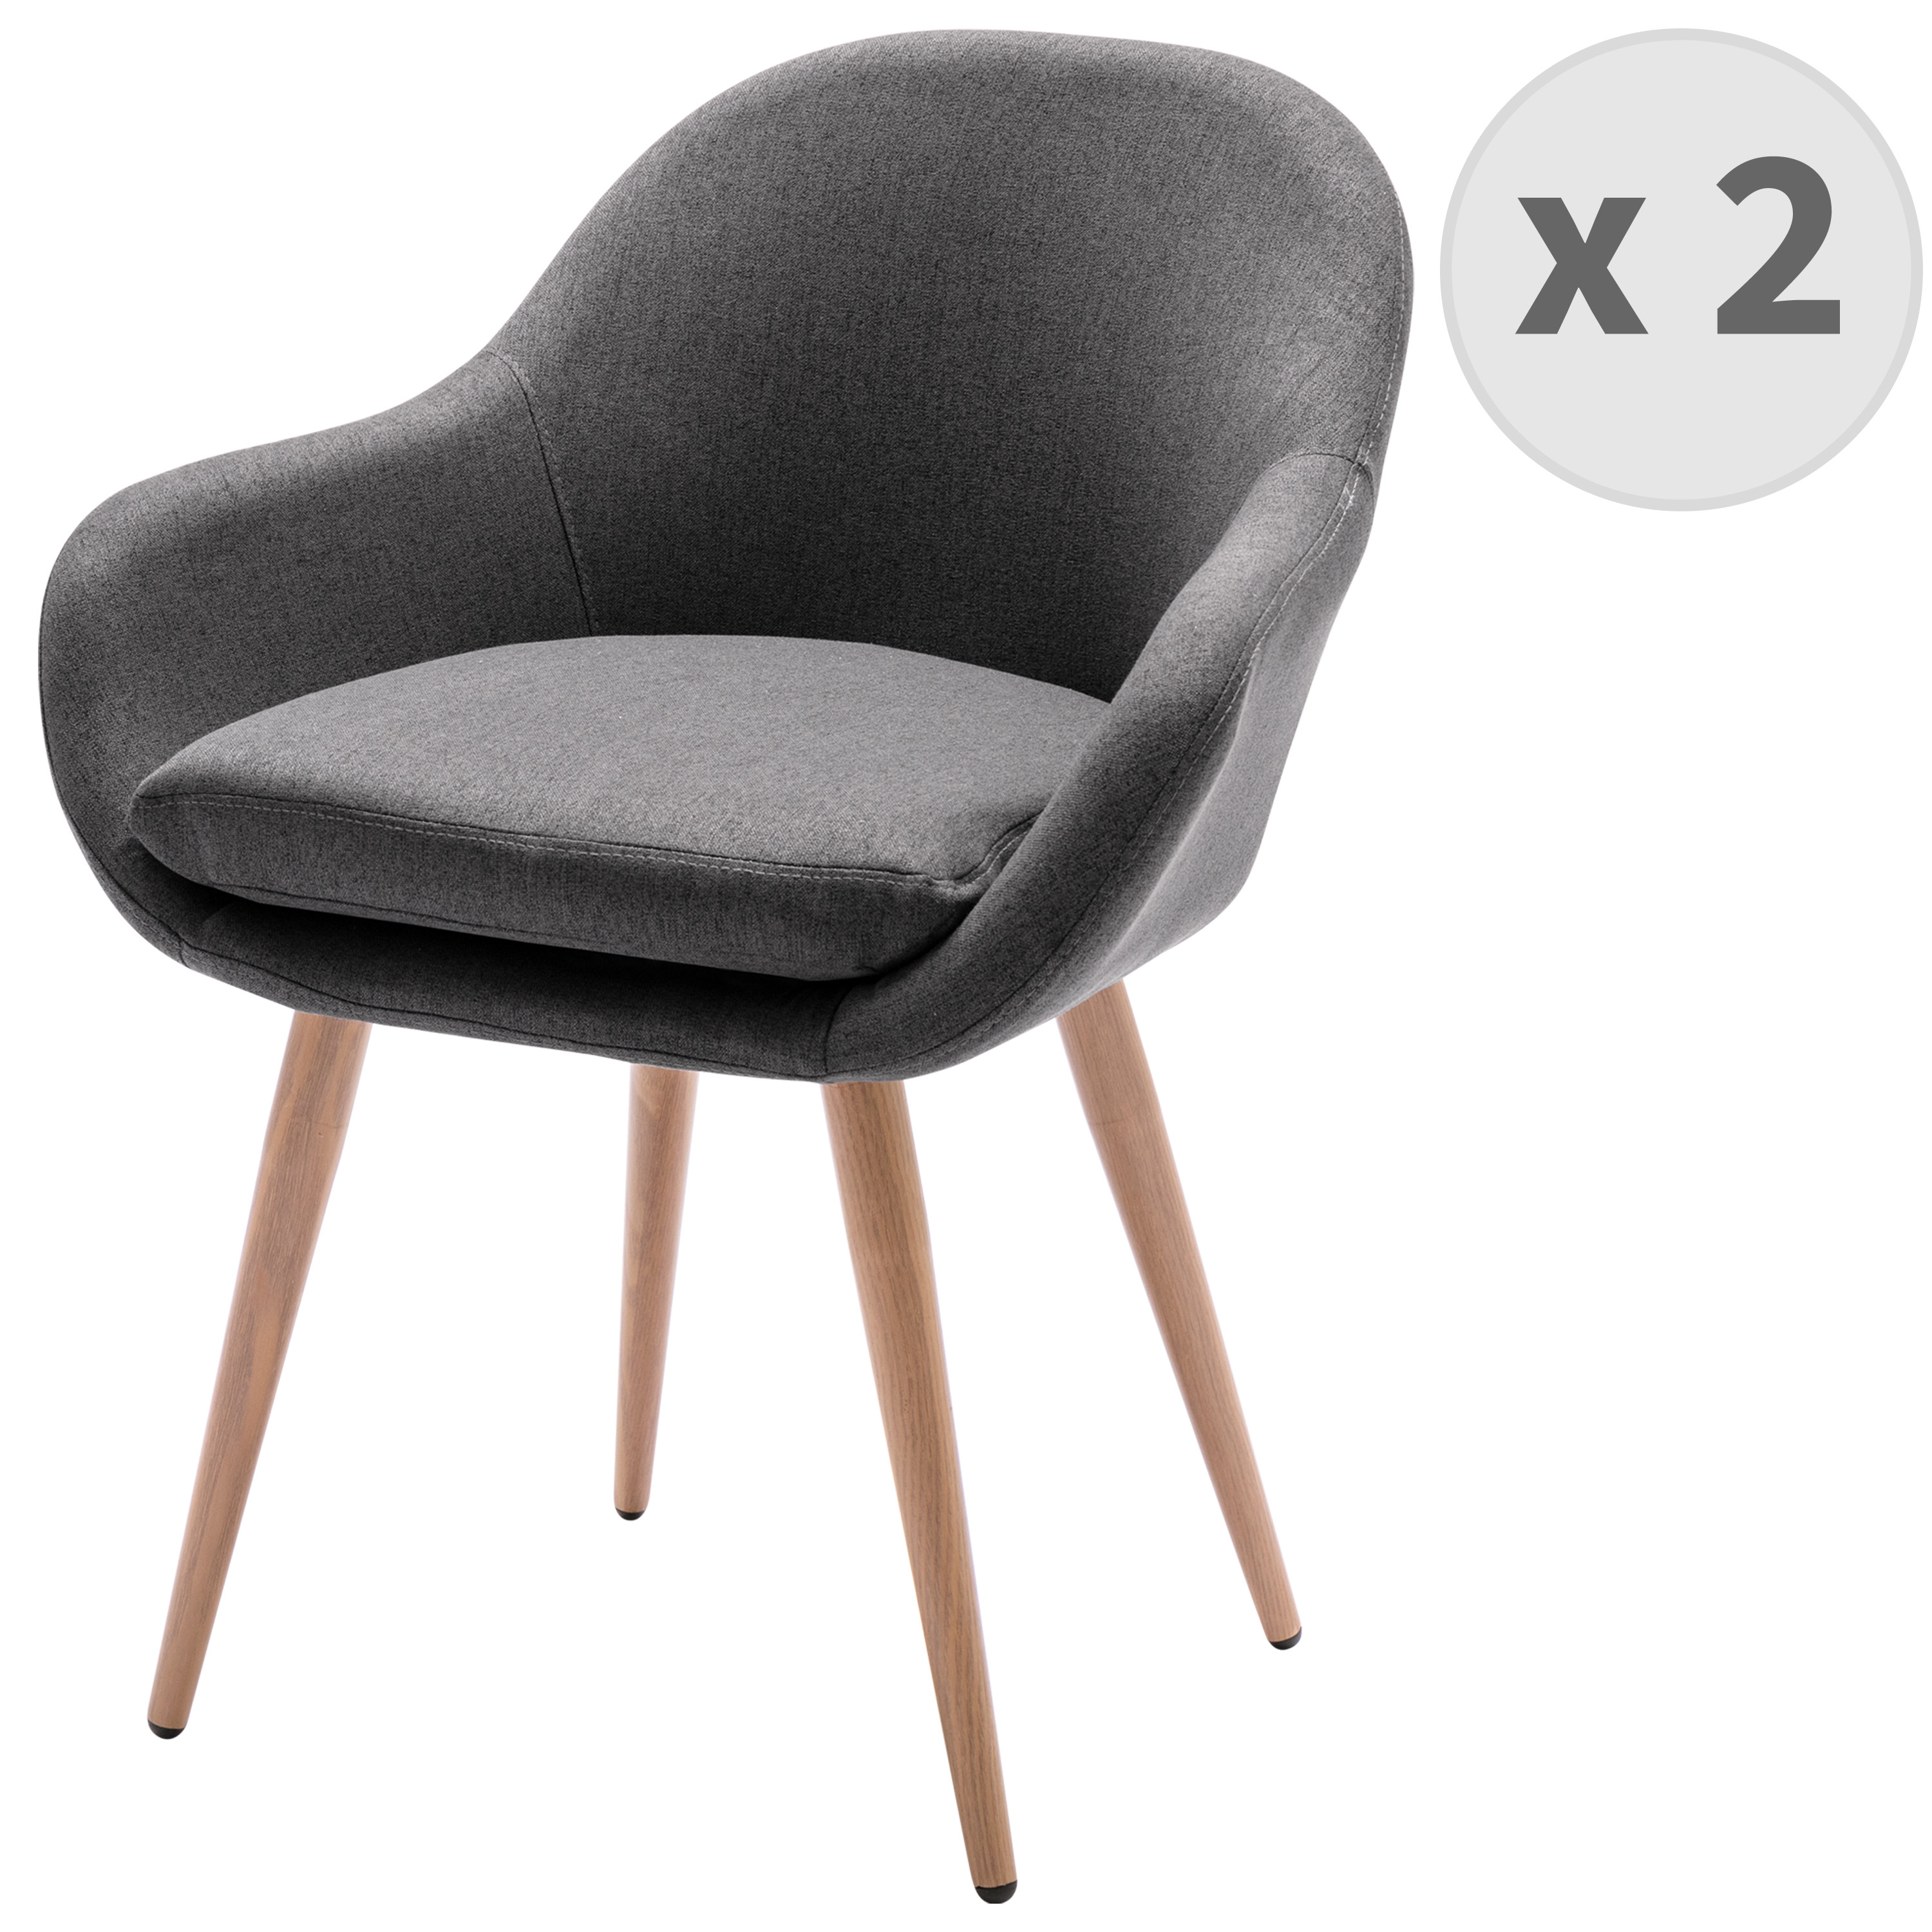 Chaise scandinave tissu gris pieds métal effet bois (x2)